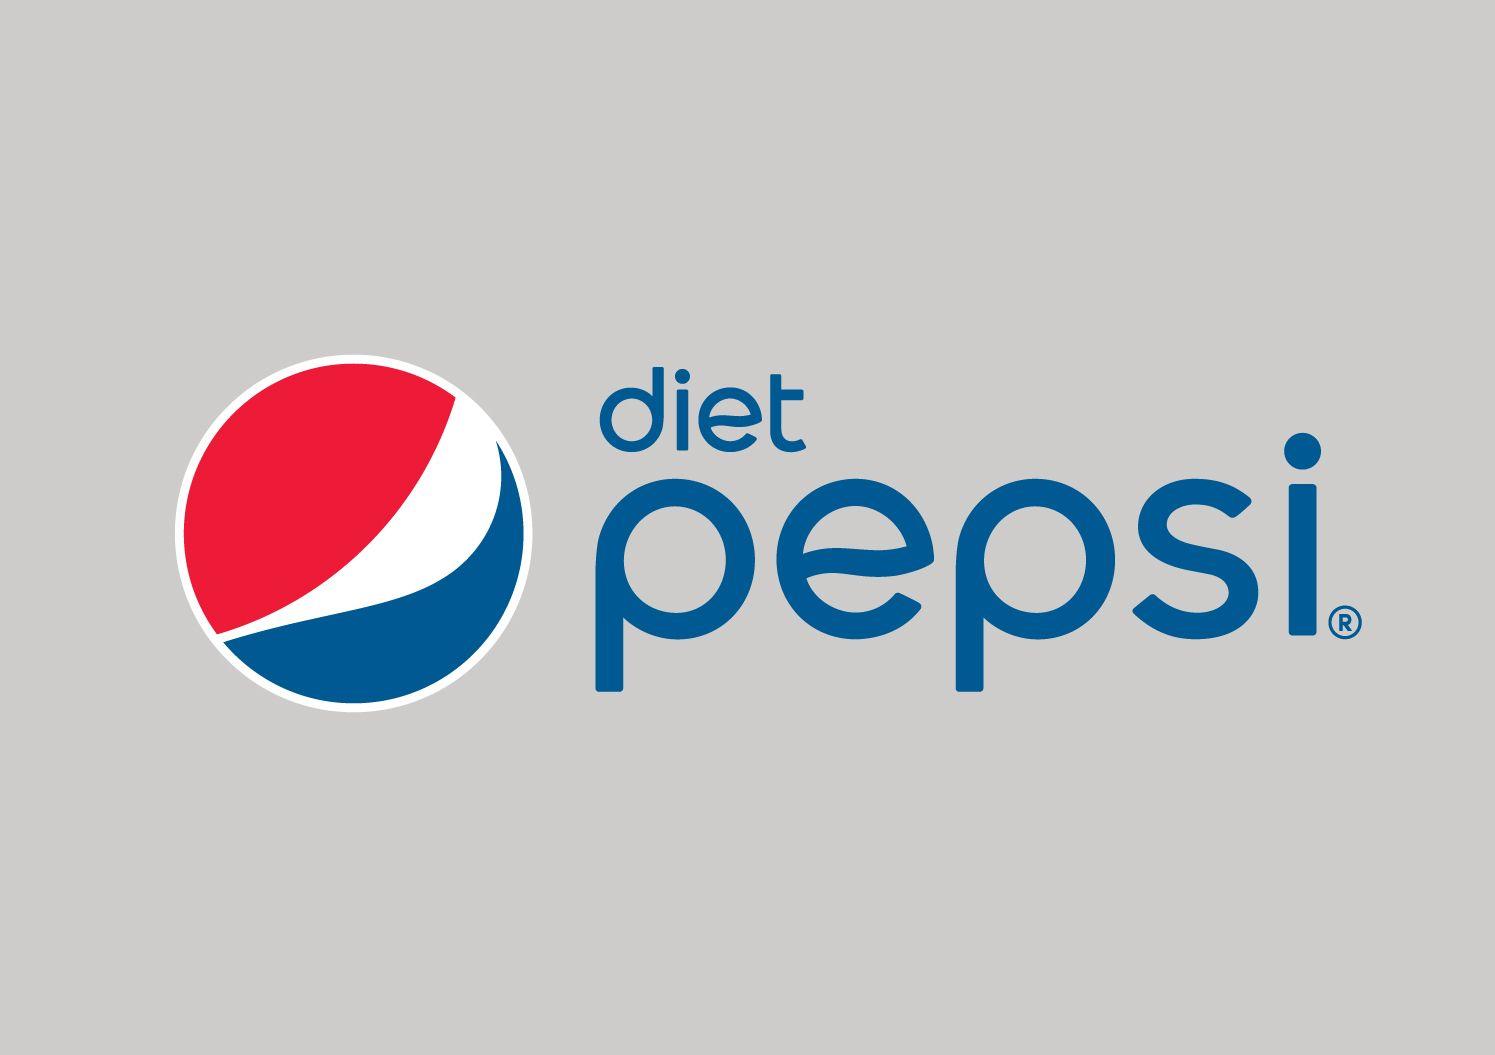 Diet Pepsi and Pepsi Logo - Diet Pepsi | Logopedia | FANDOM powered by Wikia